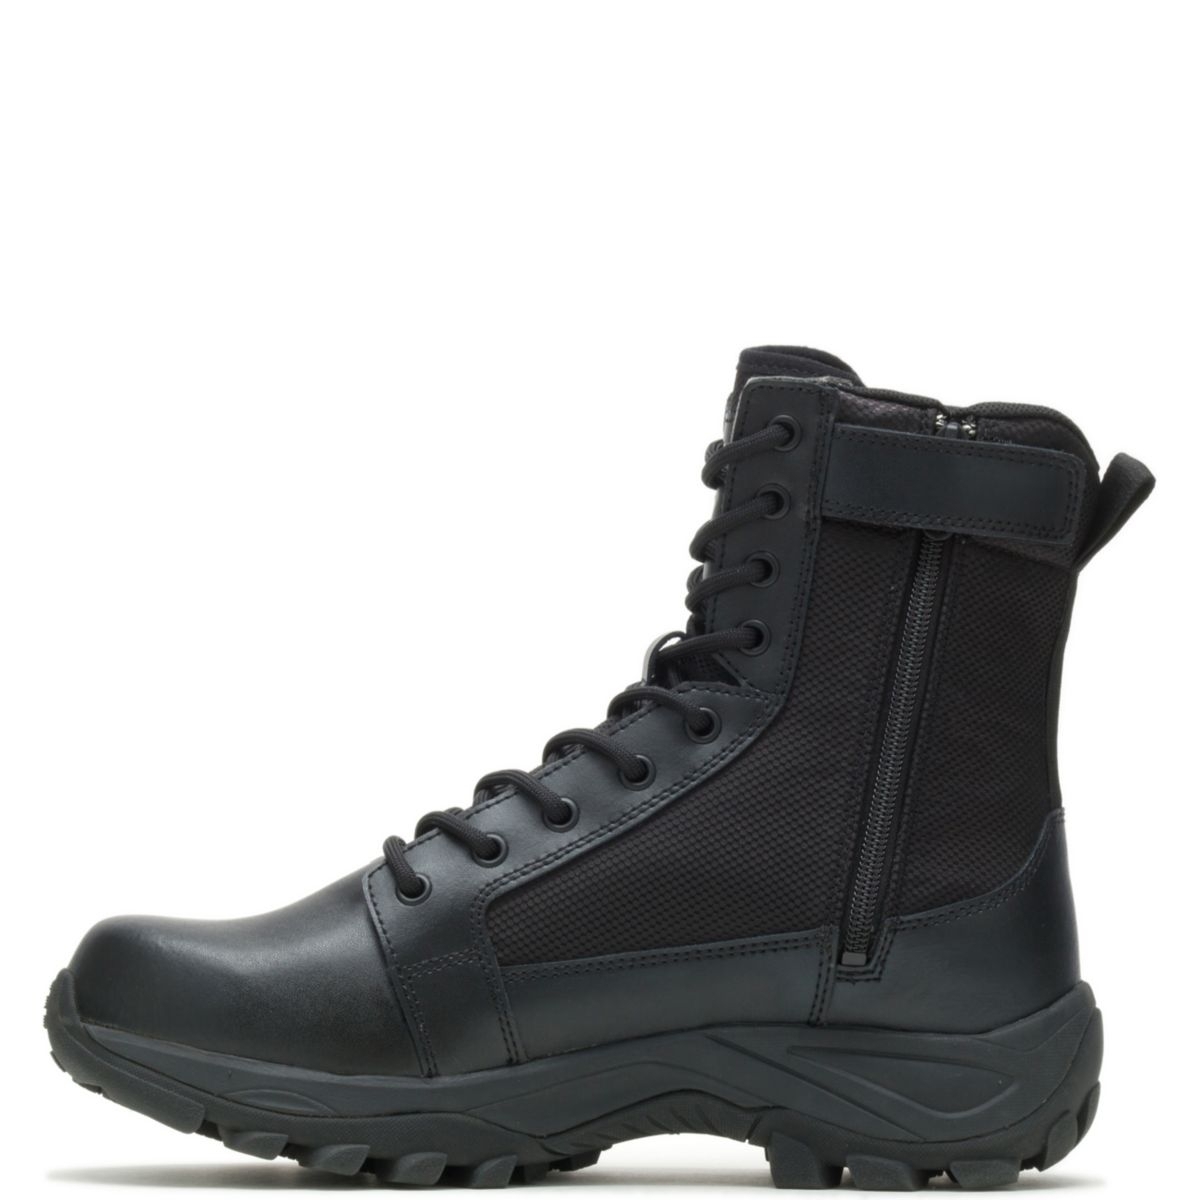 Bates Men's Fuse 8-inch Side Zip Waterproof Boot Black - E06508 BLACK - BLACK, 11